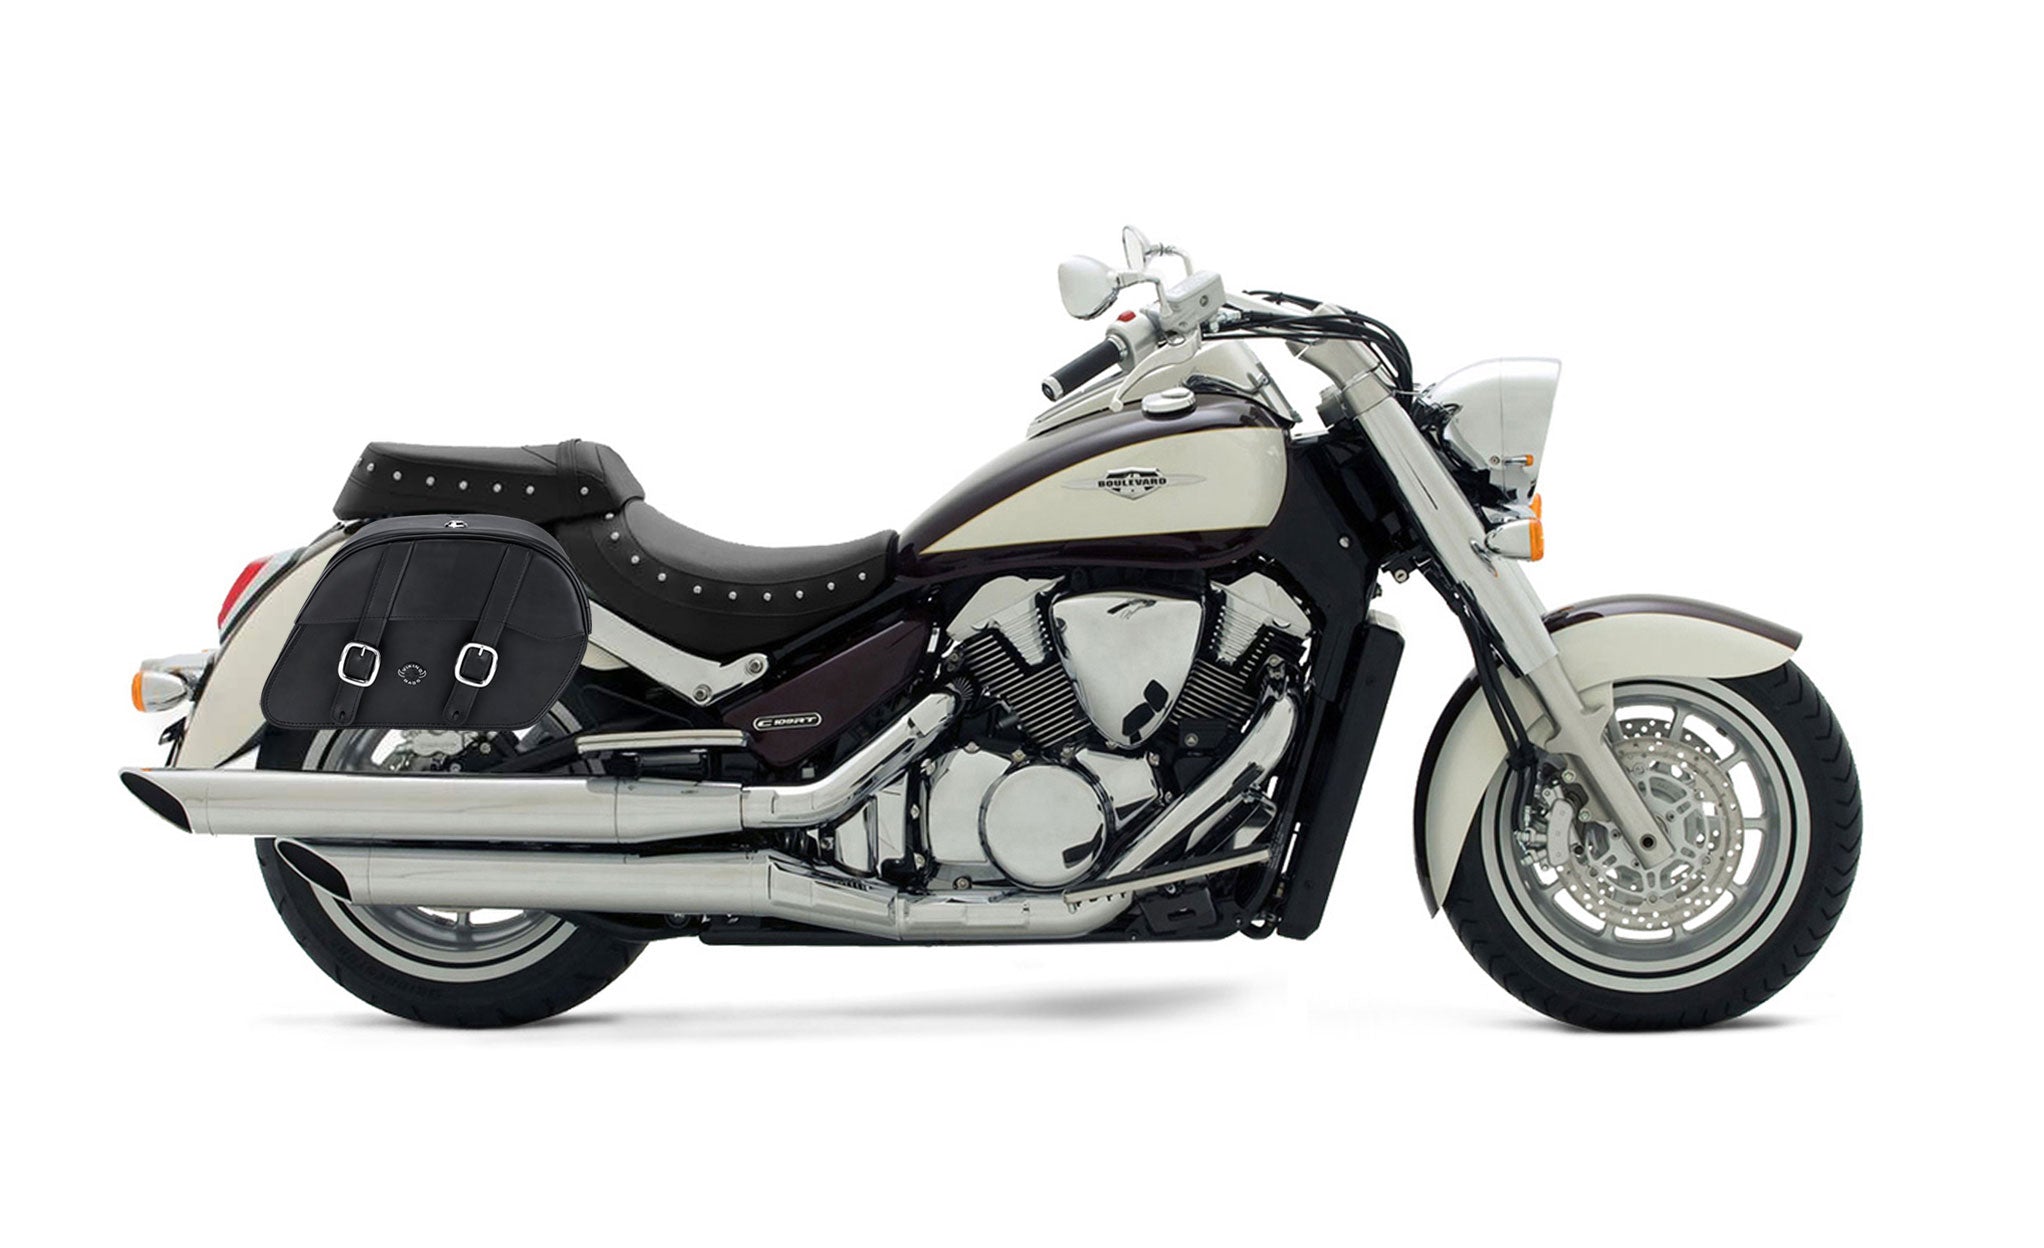 Viking Skarner Medium Lockable Suzuki Boulevard C109 Leather Motorcycle Saddlebags on Bike Photo @expand